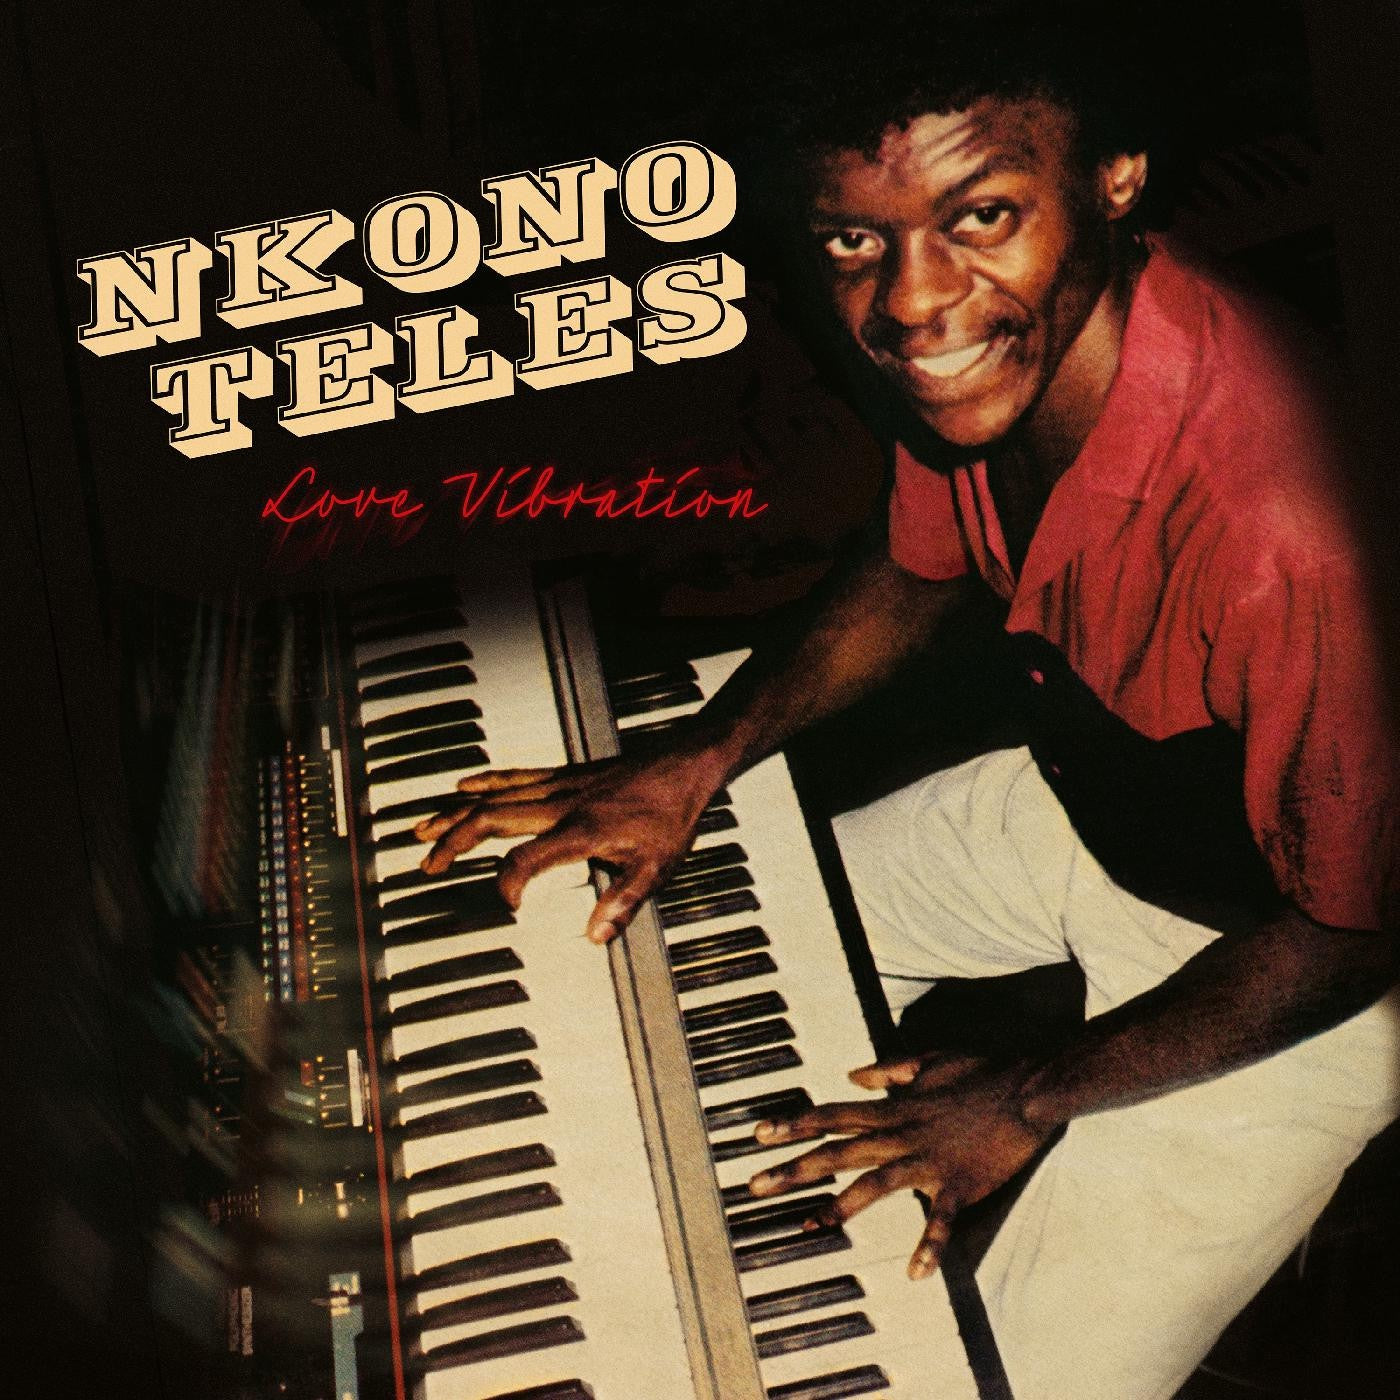 Nkono Teles - Love Vibration - New LP Record 2023 Soundway UK Vinyl - Boogie / Electro Funk / African